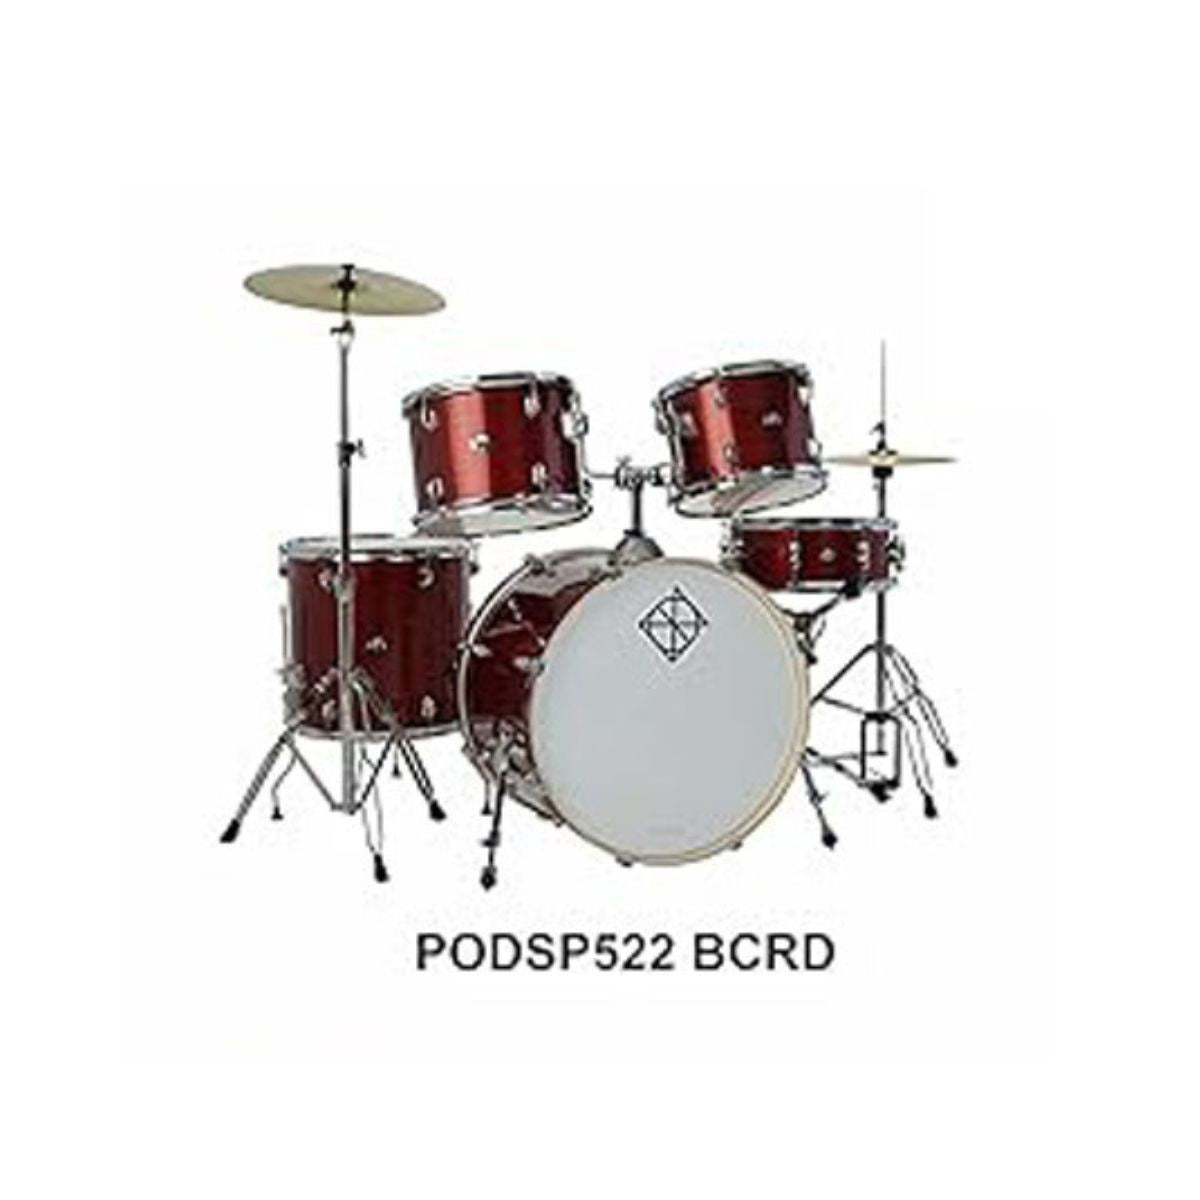 Dixon Spark- PODSP522 BCRD Acoustic Drum (full kit) 5PCs set incl Hardware - Cyclone Red